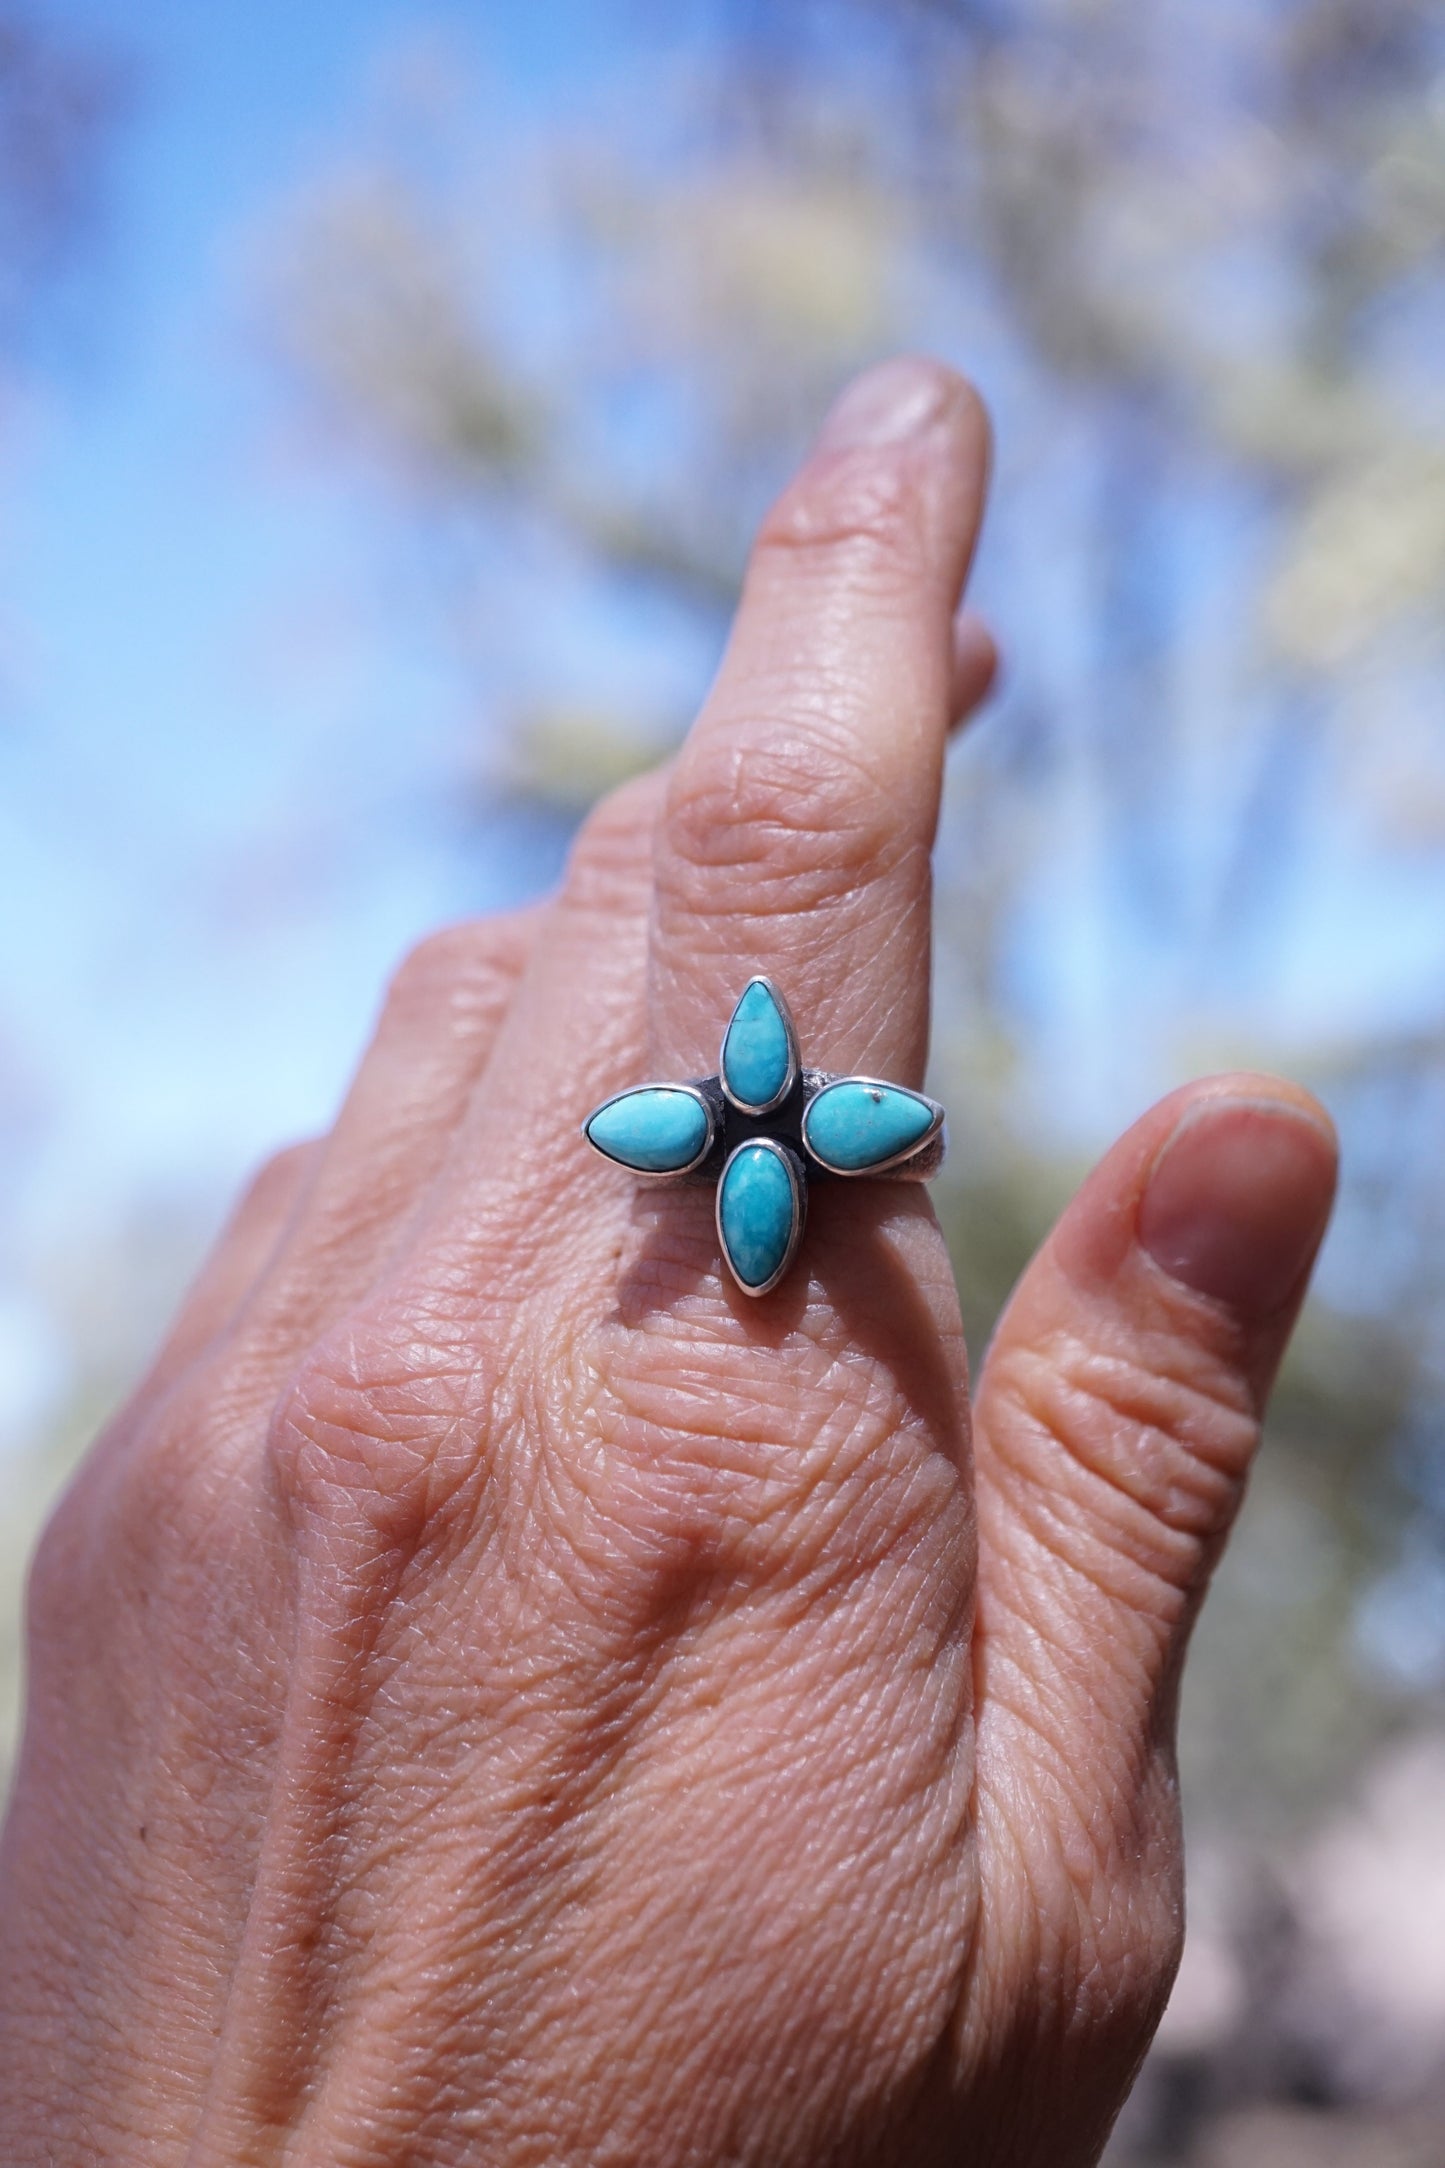 sandcast flower burst ring with blue ridge turquoise - size 6.75 - Lumenrose